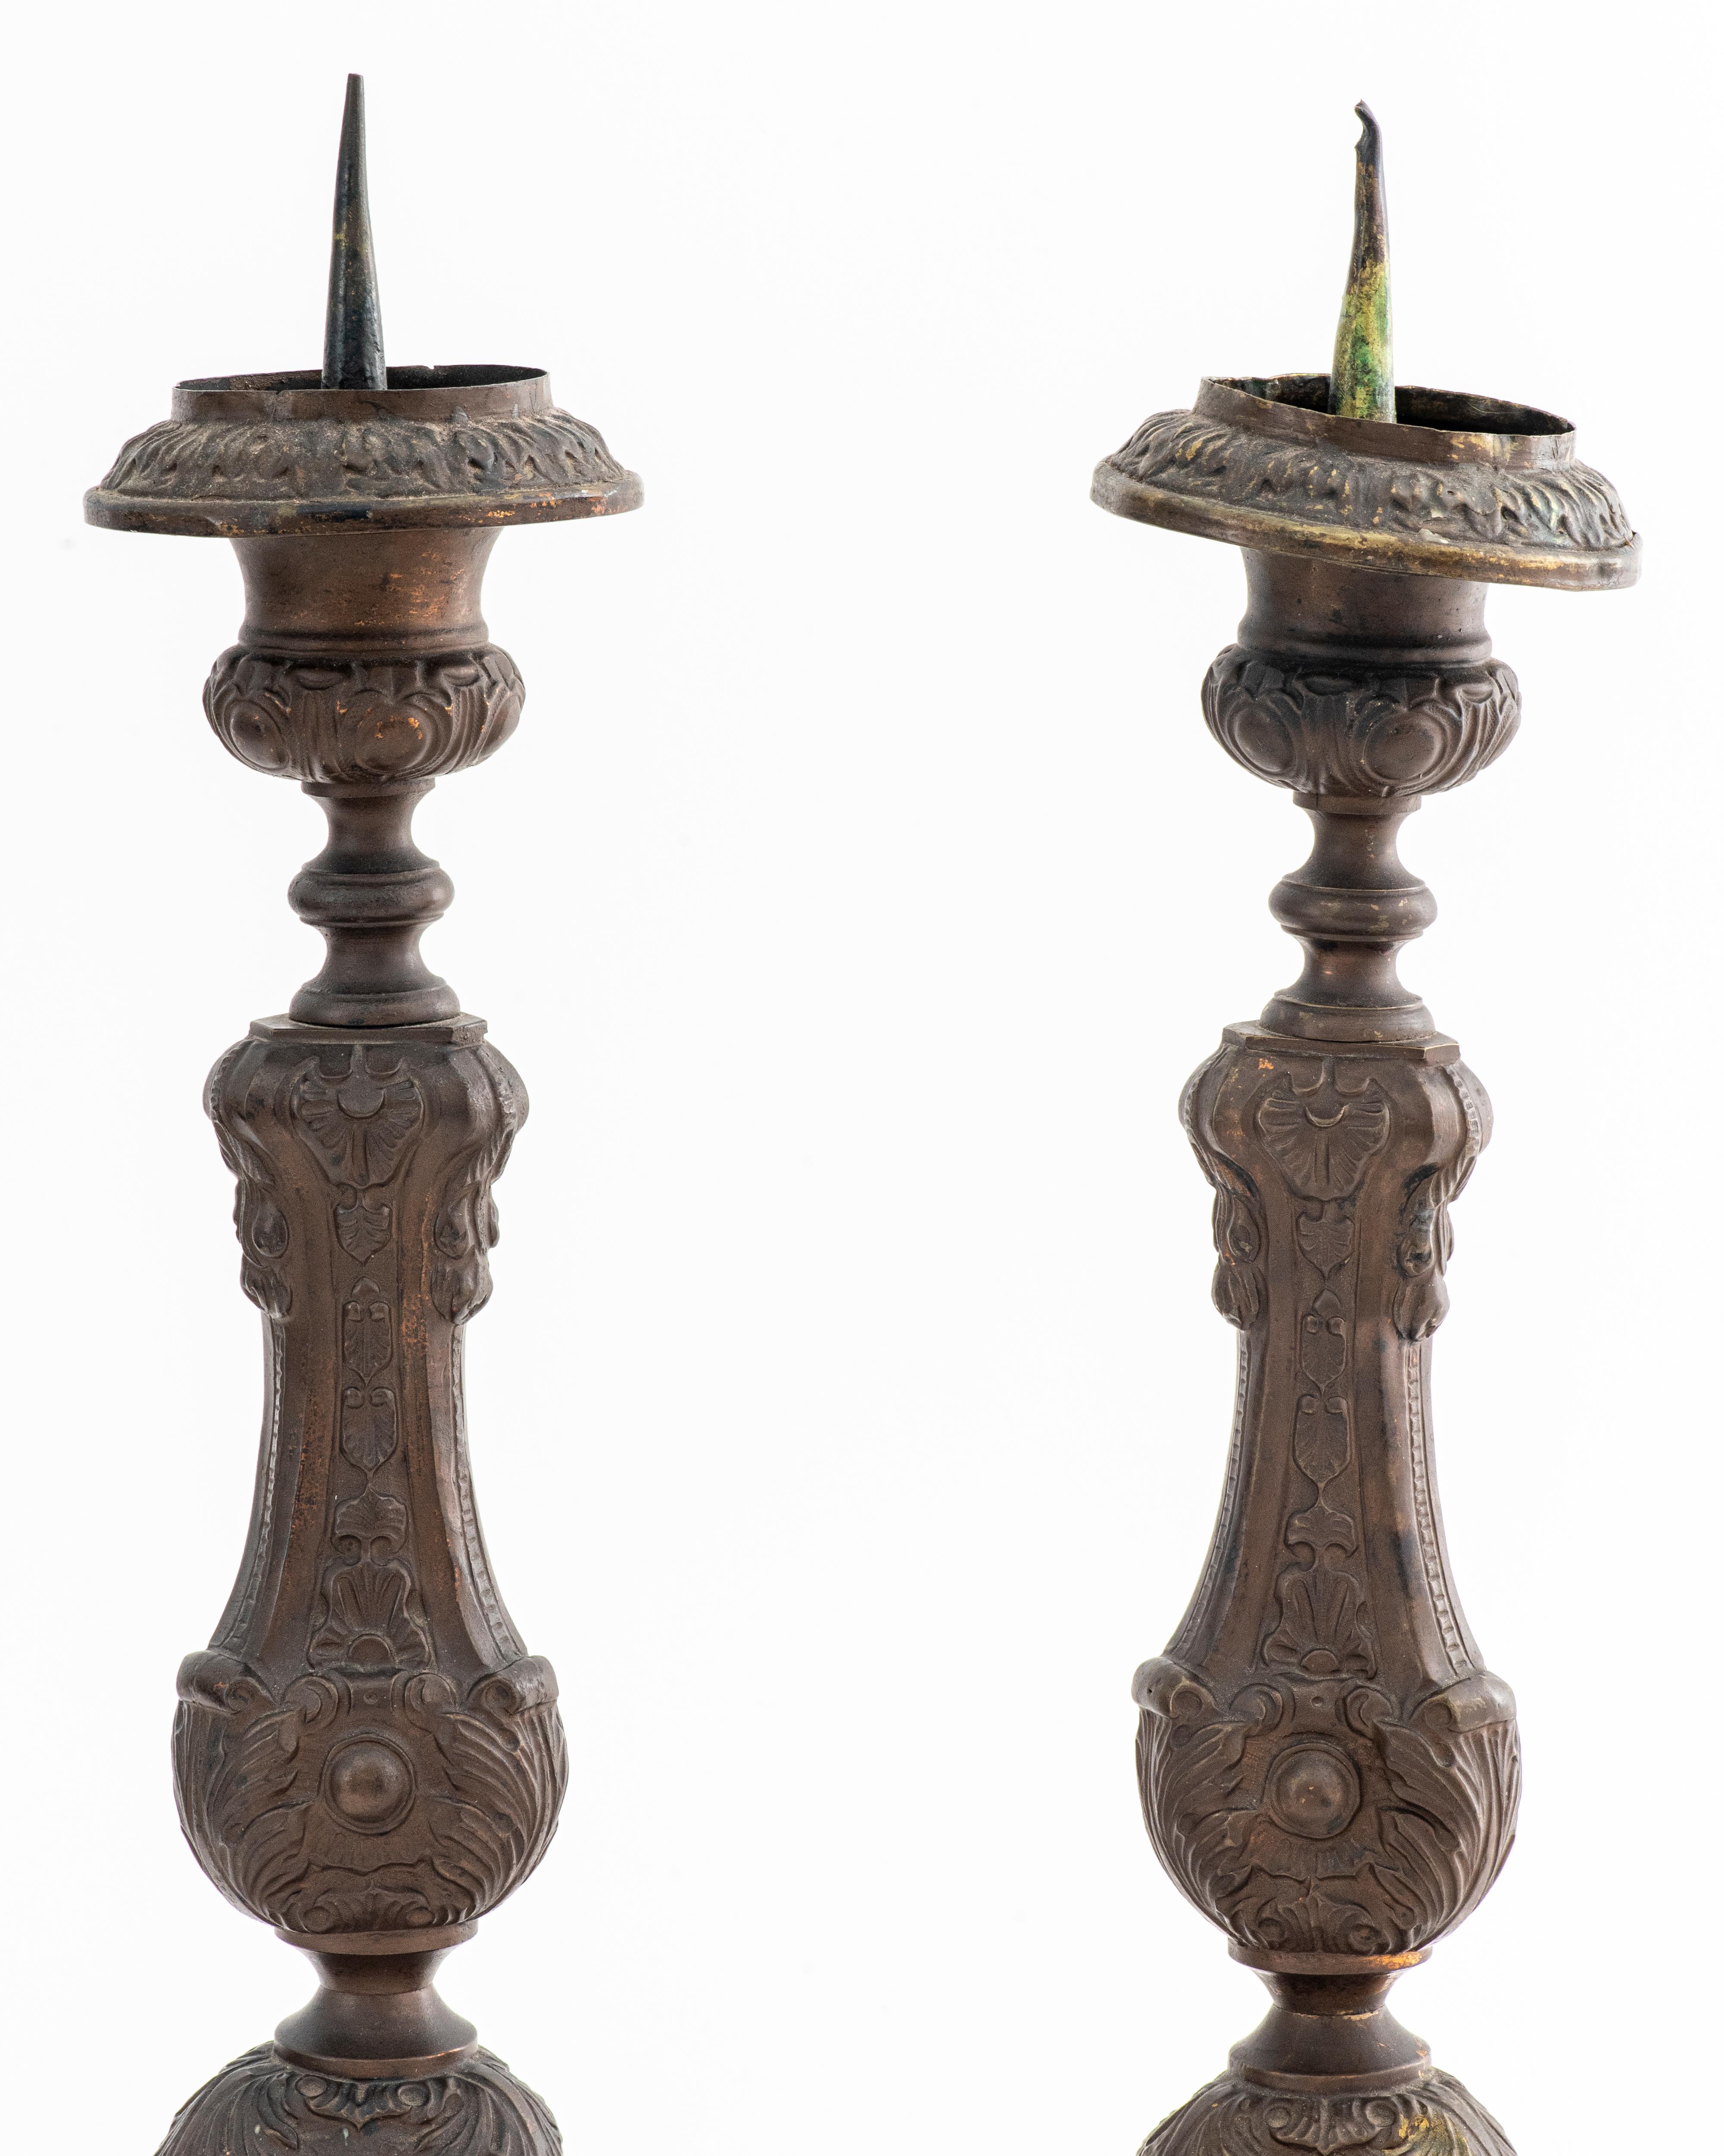 Repoussé Pair of Baroque Revival Repousse Brass Candle Pricks For Sale